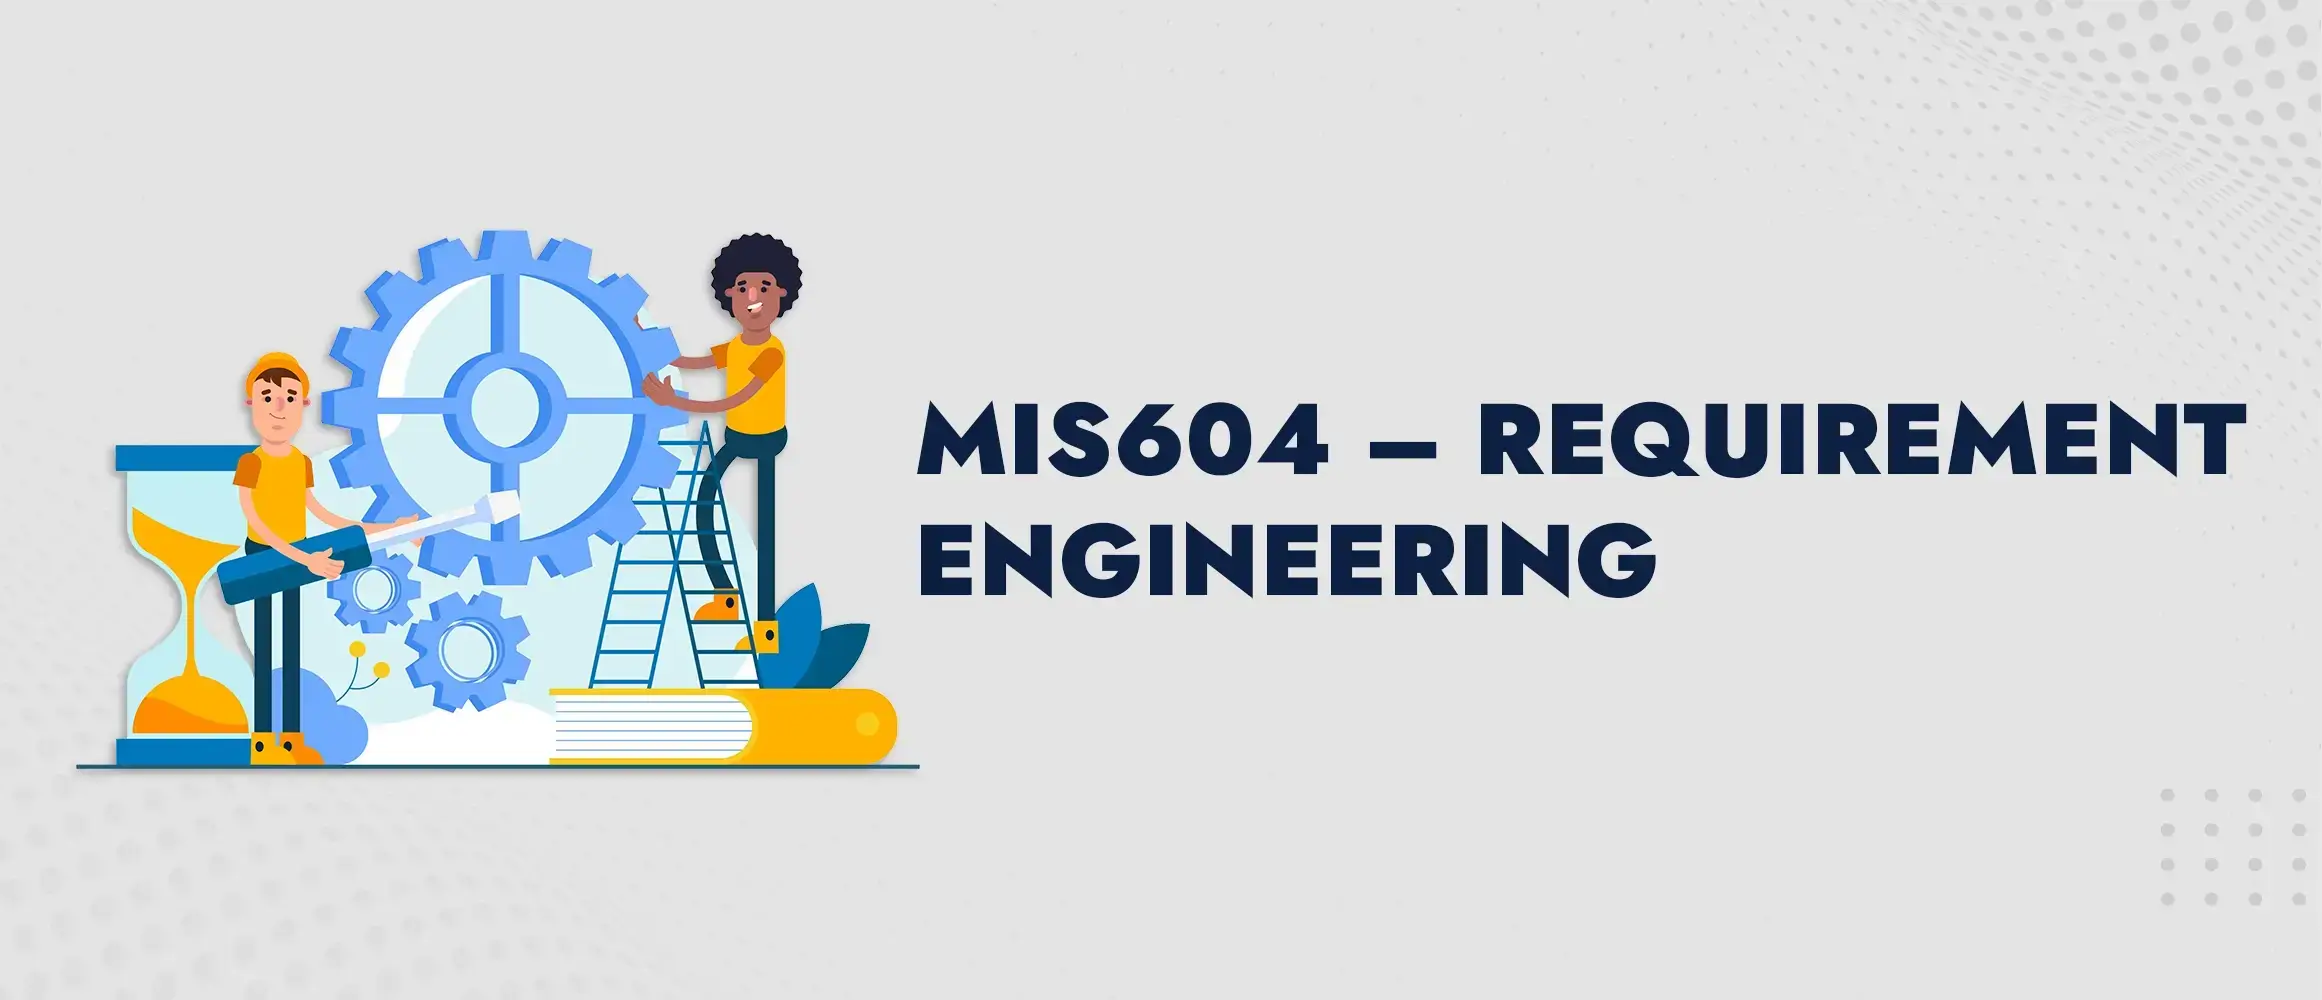 MIS604 Requirement Engineering